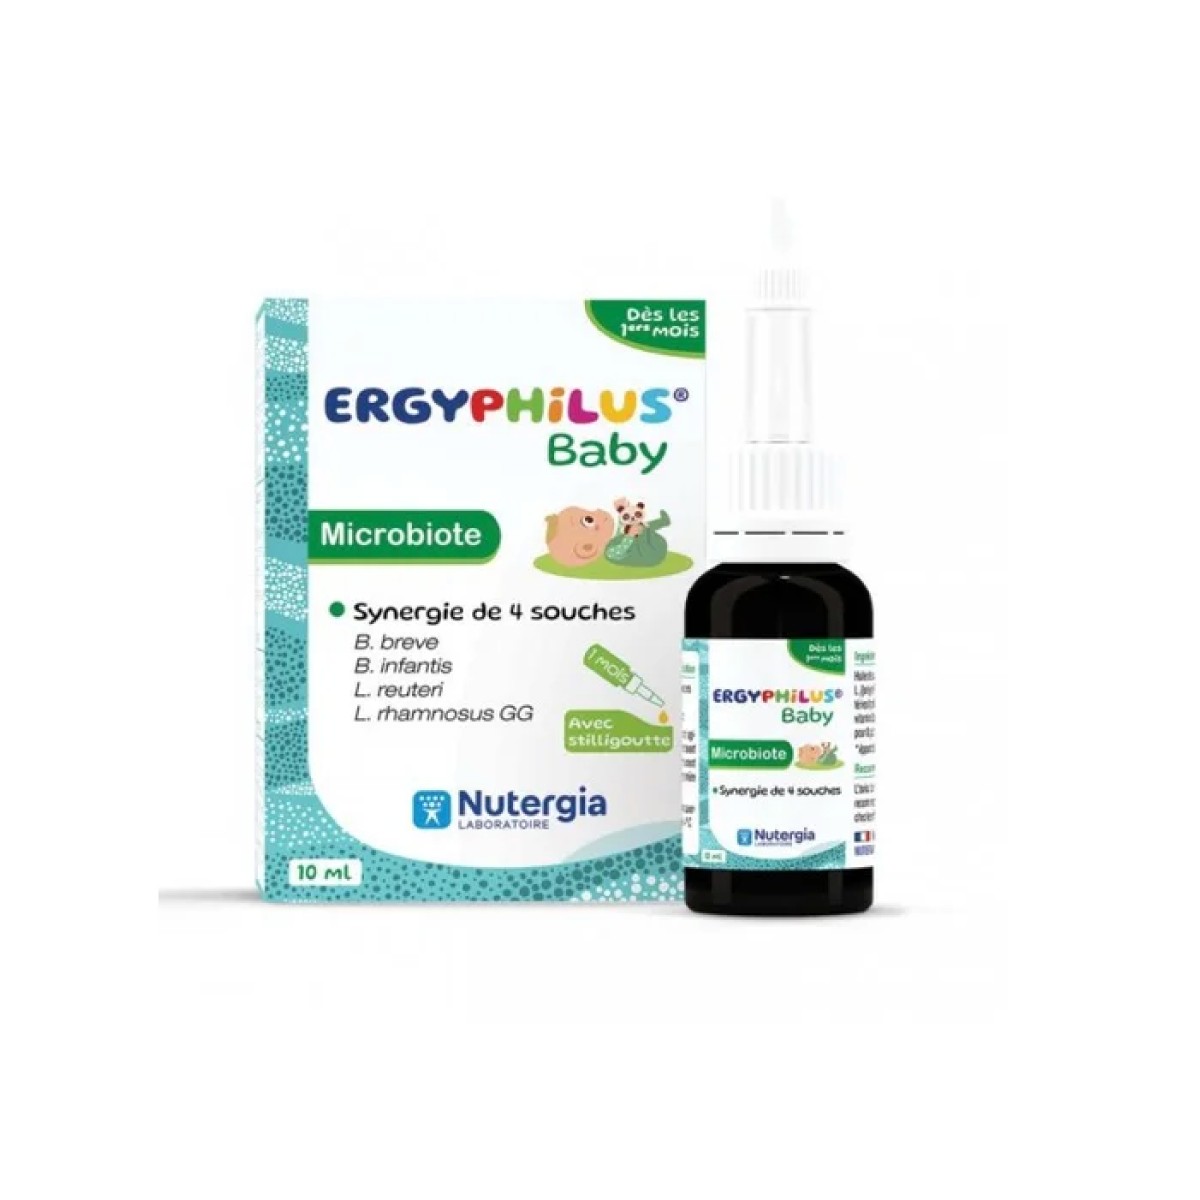 Comprar cápsulas Probiótico ERGYPHILUS Íntima Nutergia Salud femenina